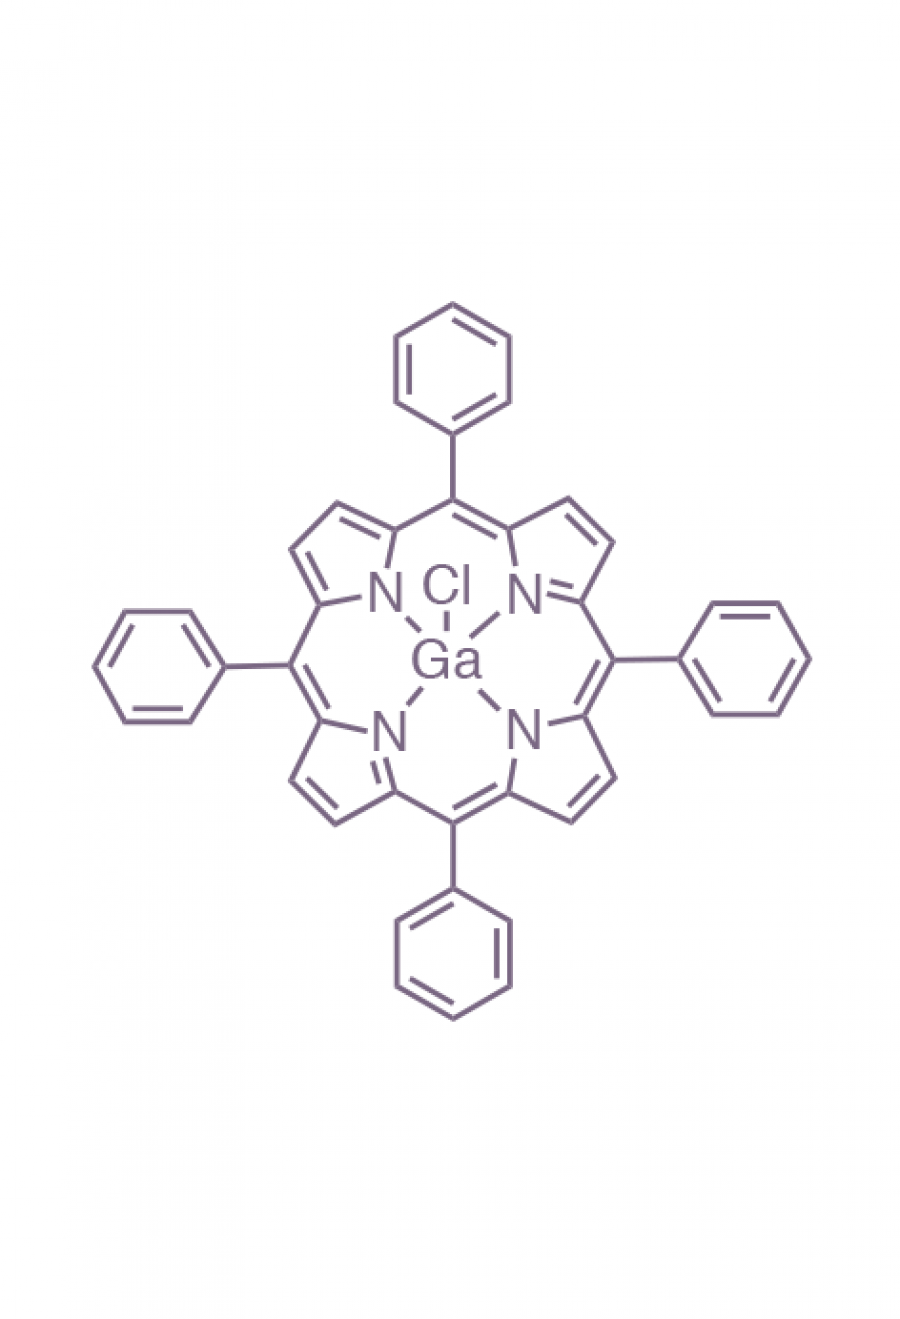 gallium(III) 5,10,15,20-(tetraphenyl)porphyrin chloride  | Porphychem Expert porphyrin synthesis for research & industry